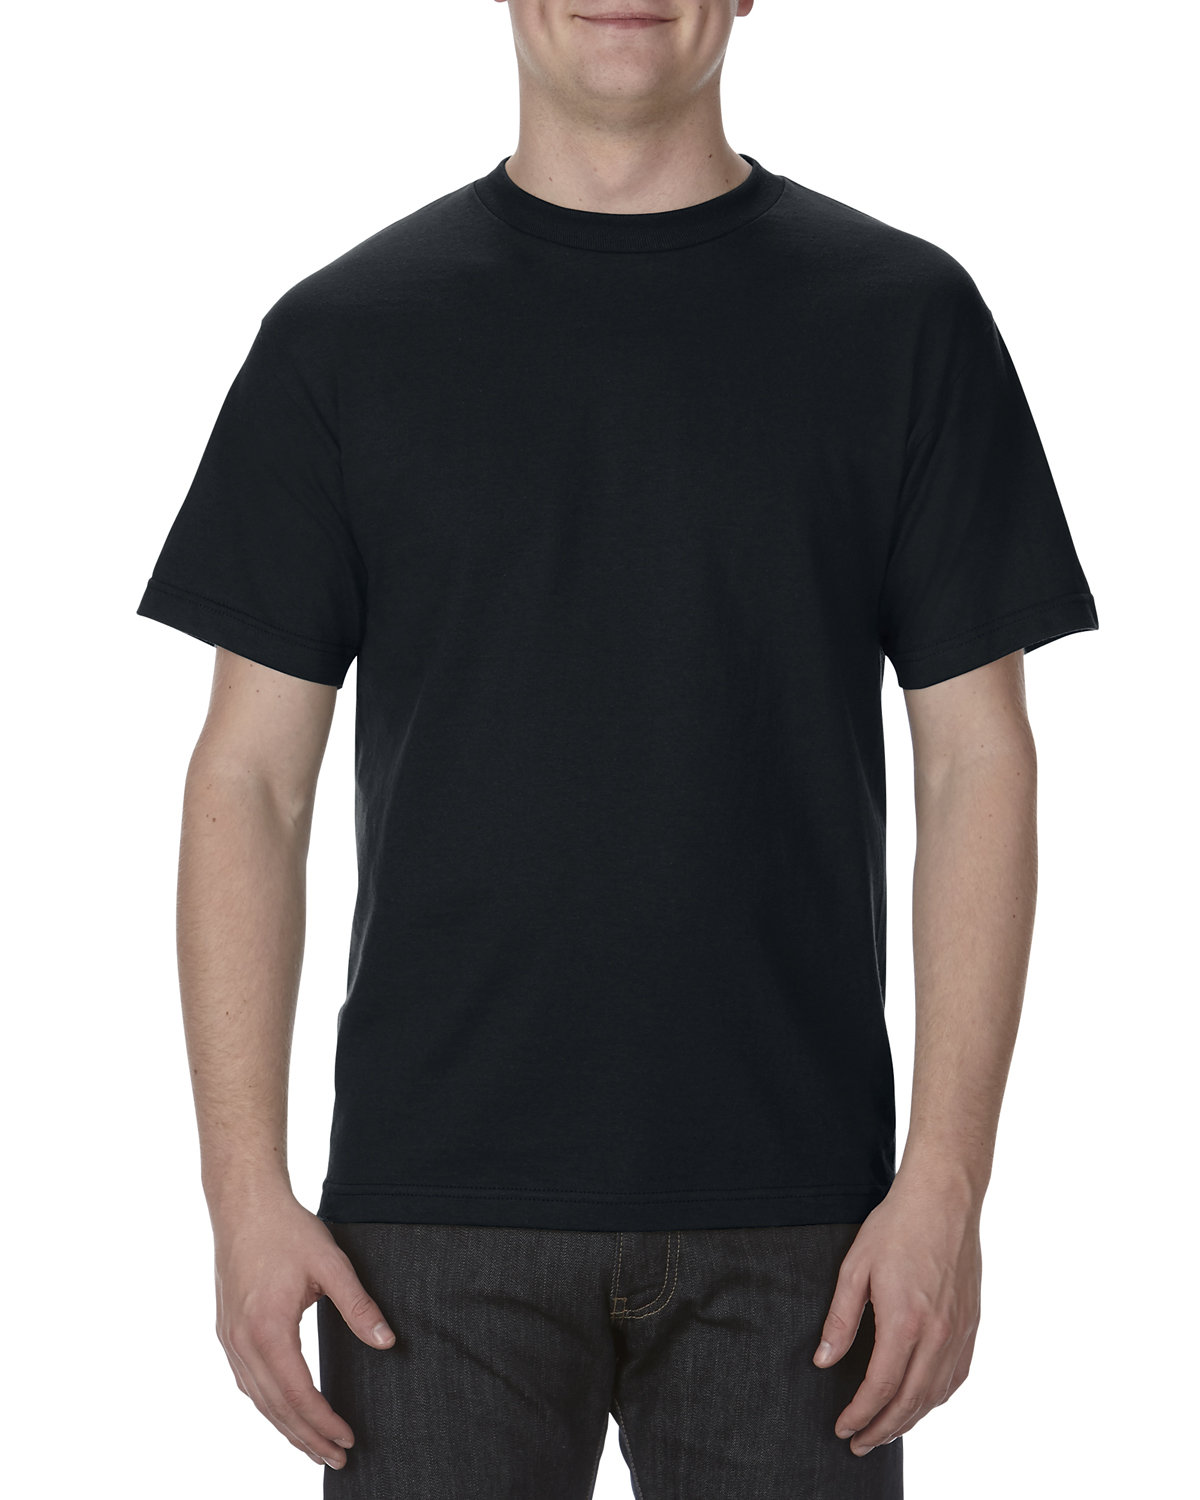 American Apparel AL1301 Adult 6.0 oz., 100% Cotton T-Shirt - Black - 4XL